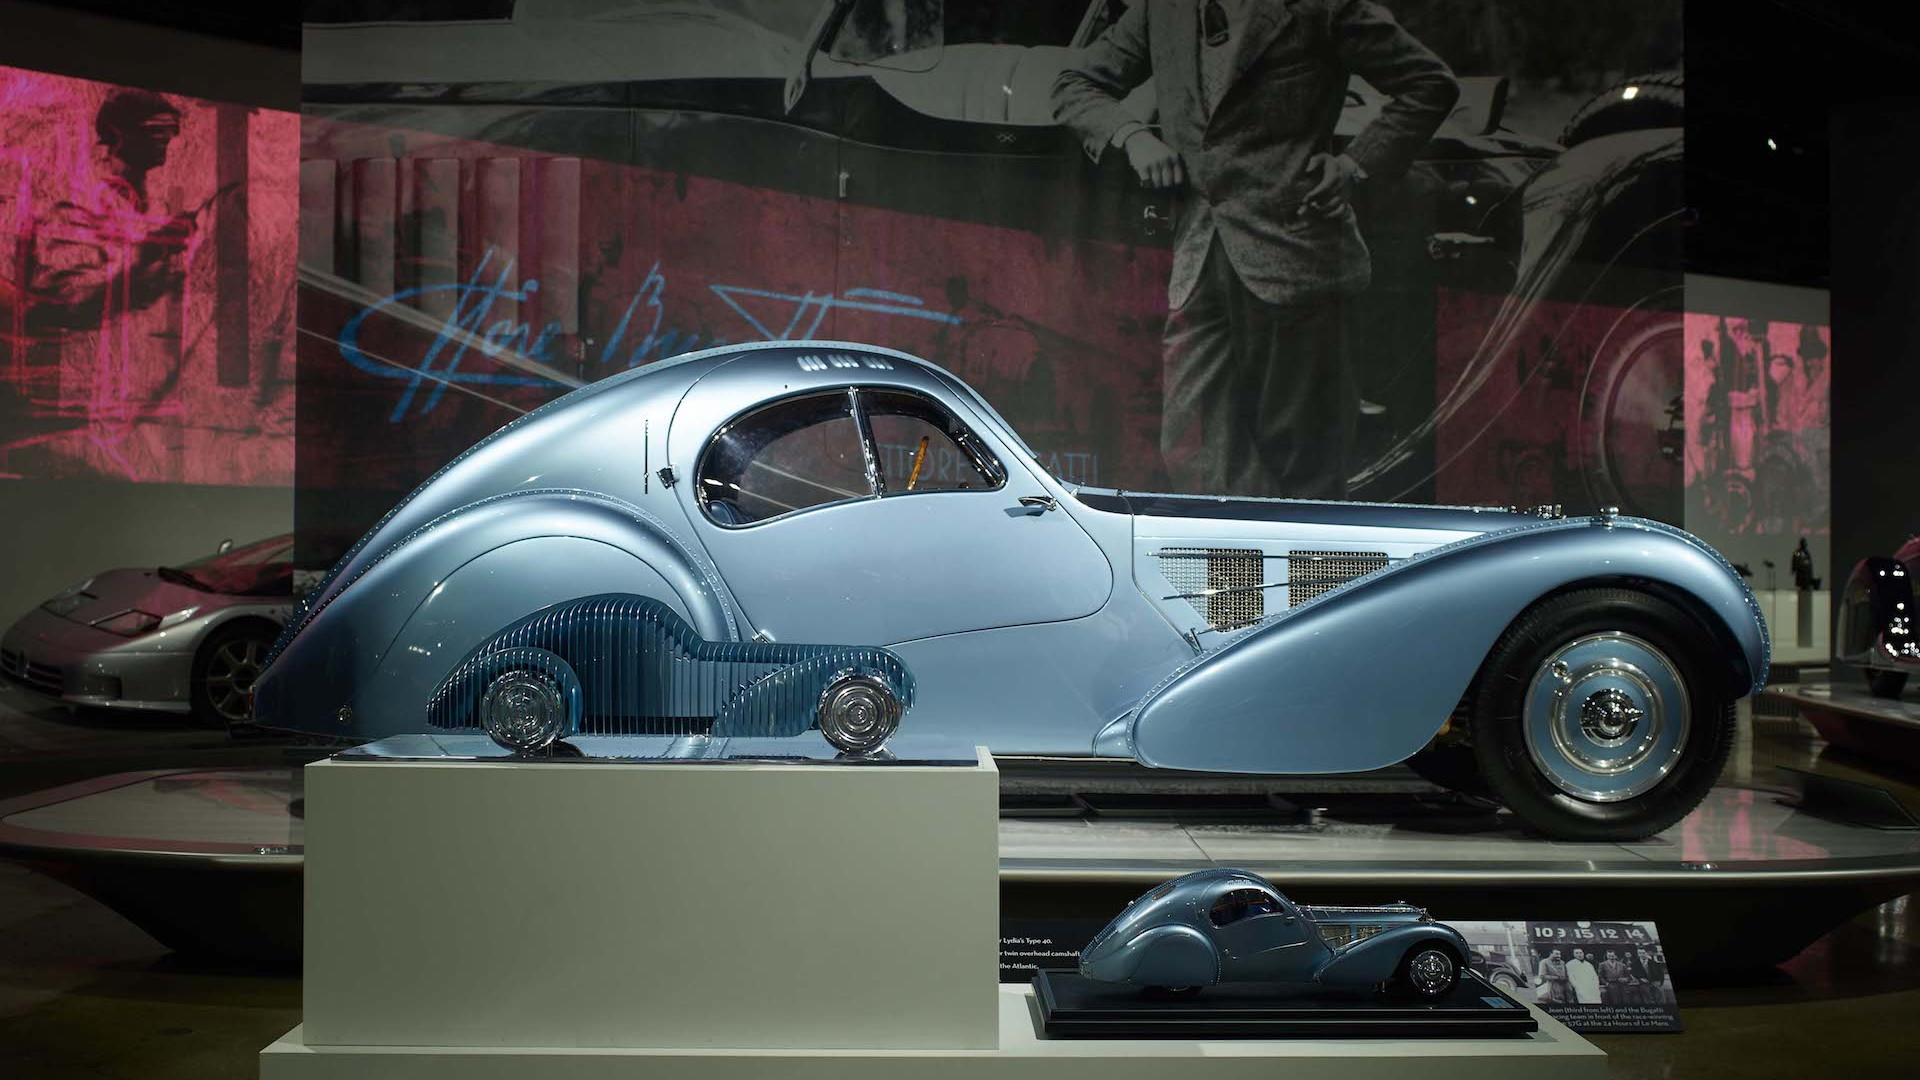 The Art of Bugatti at Petersen Museum